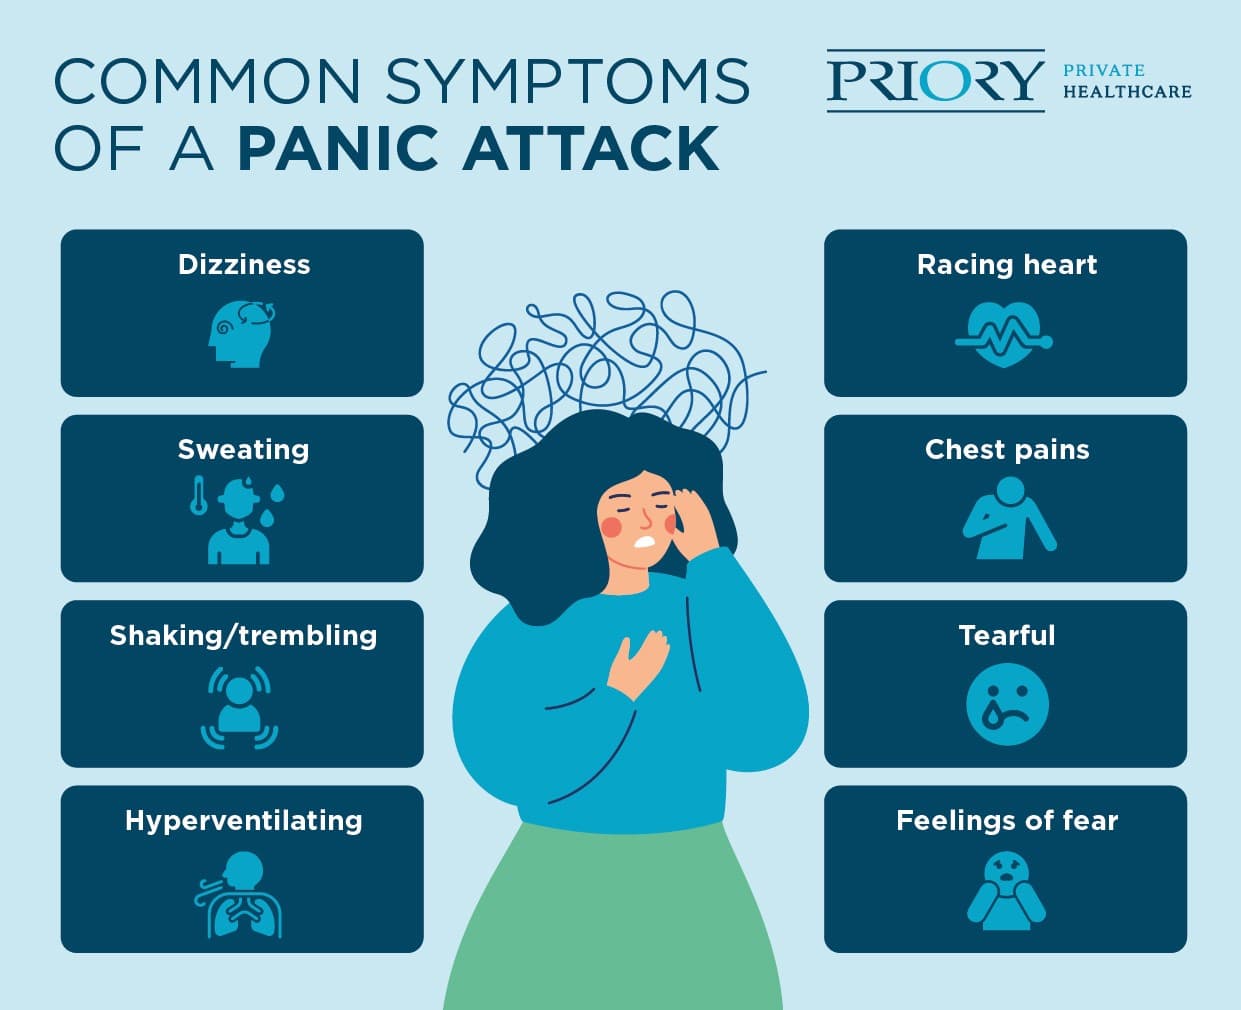 Common symptoms of a panic attack